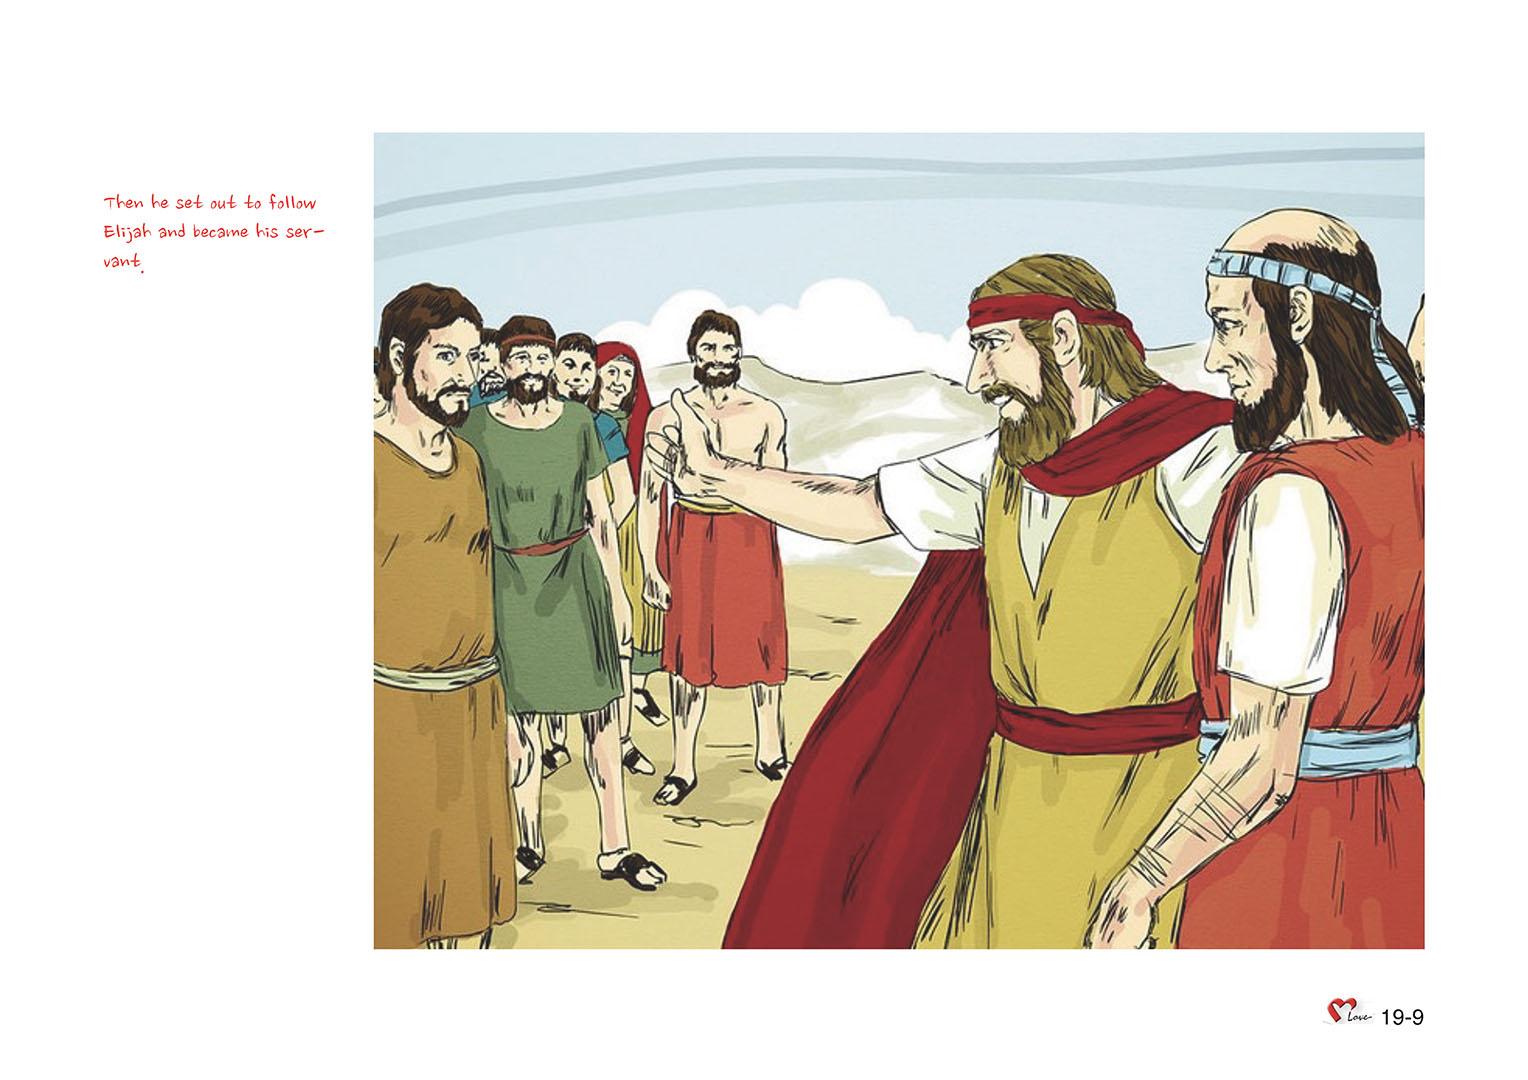 Chapter 19 - Lesson 58 - Elisha, Prophet Of Northern Israel (A)